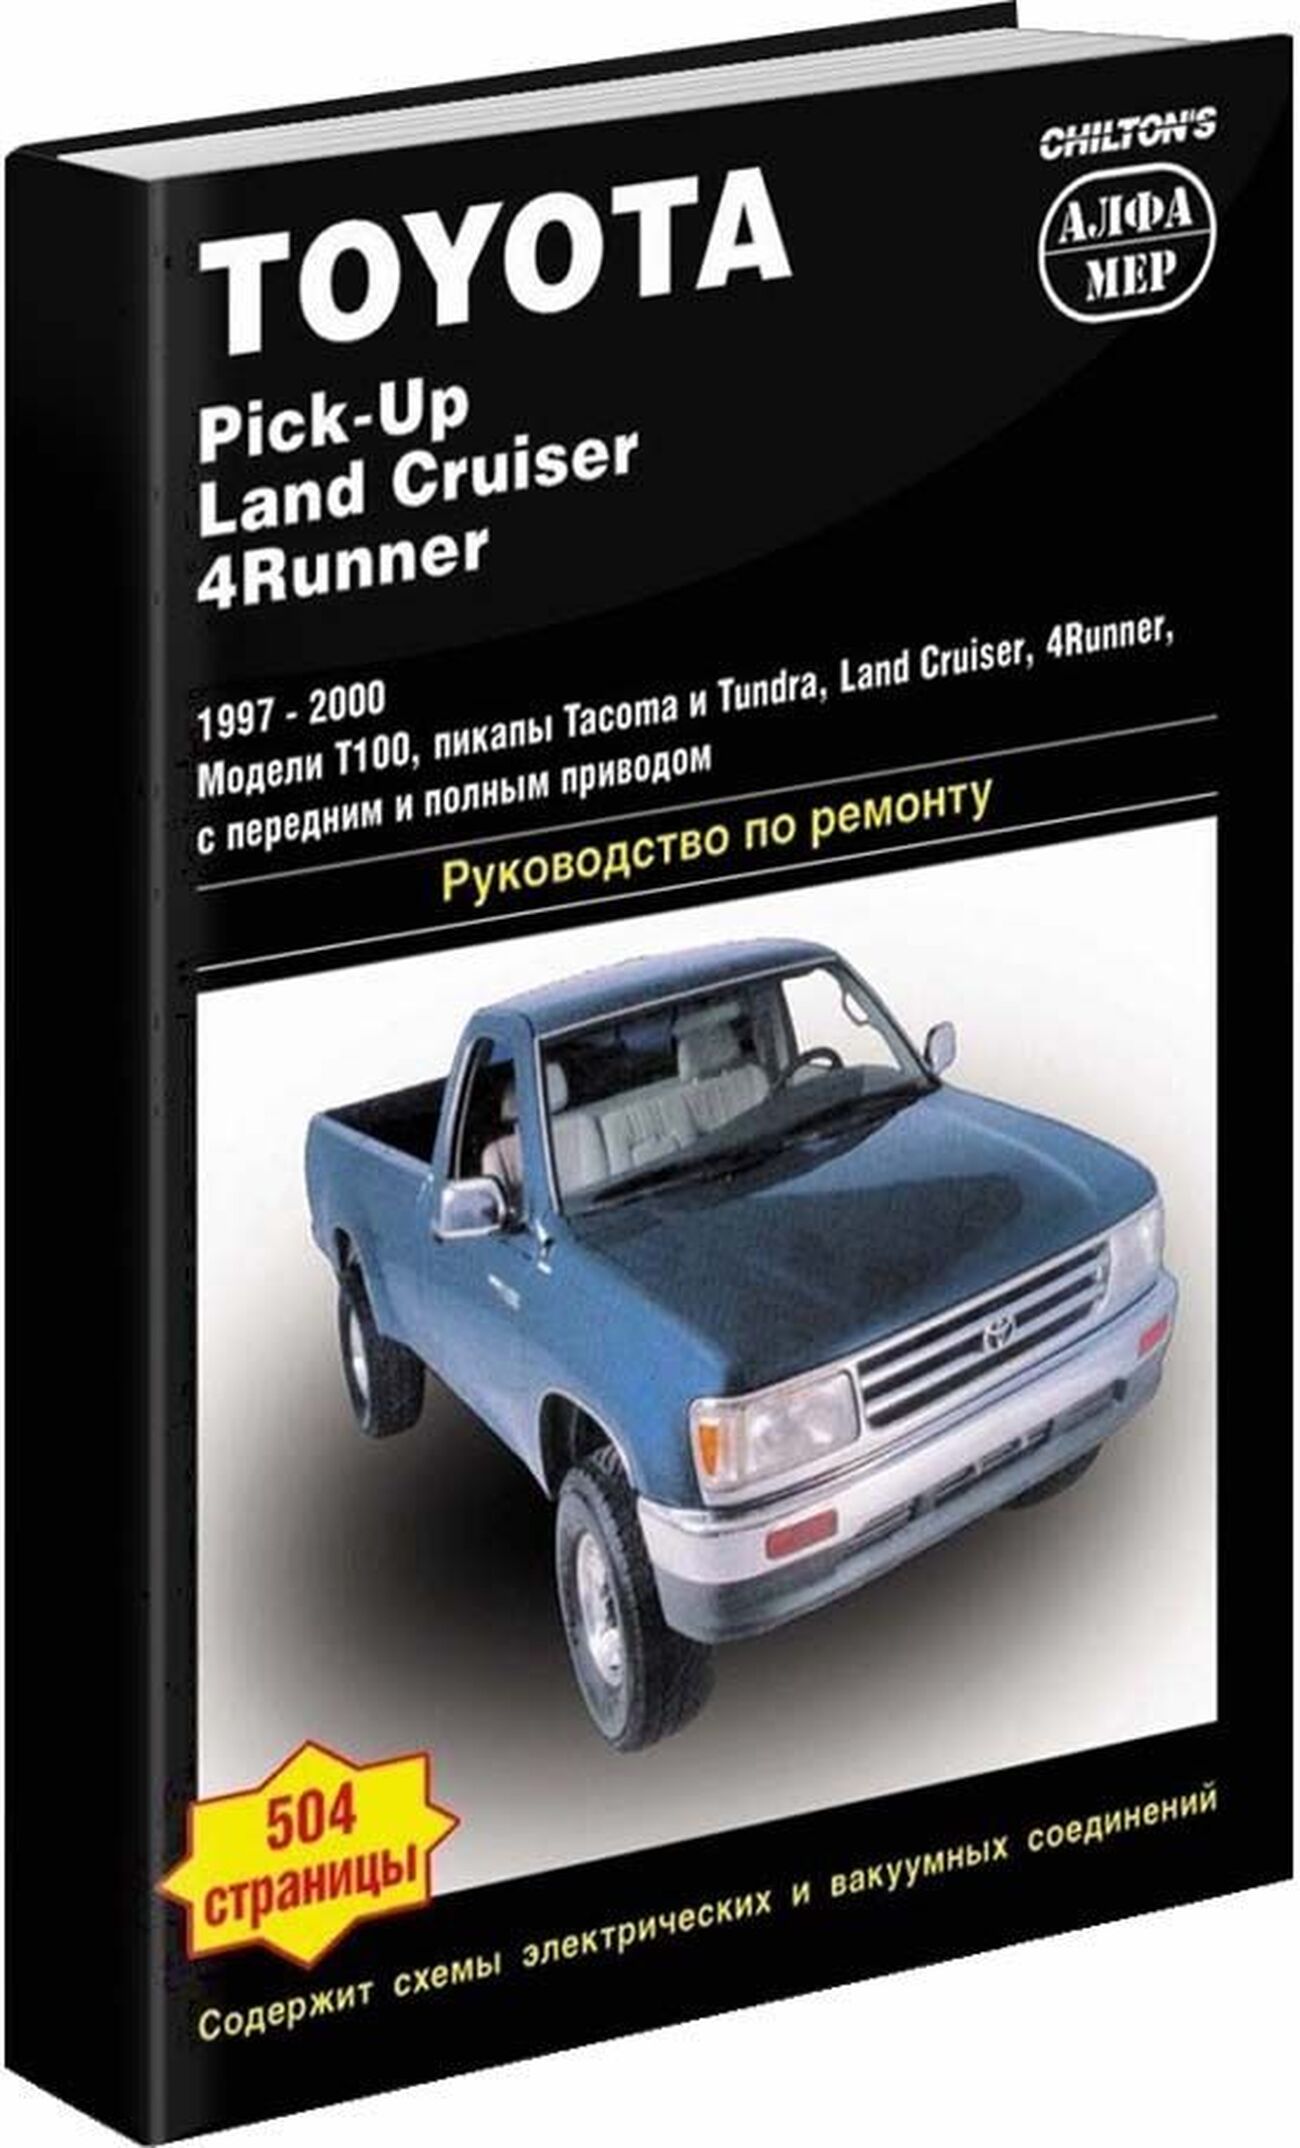 Книга: TOYOTA PICK-UP / LAND CRUISER / 4-RUNNER (б) 1997-2000 г.в., рем., то | Алфамер Паблишинг